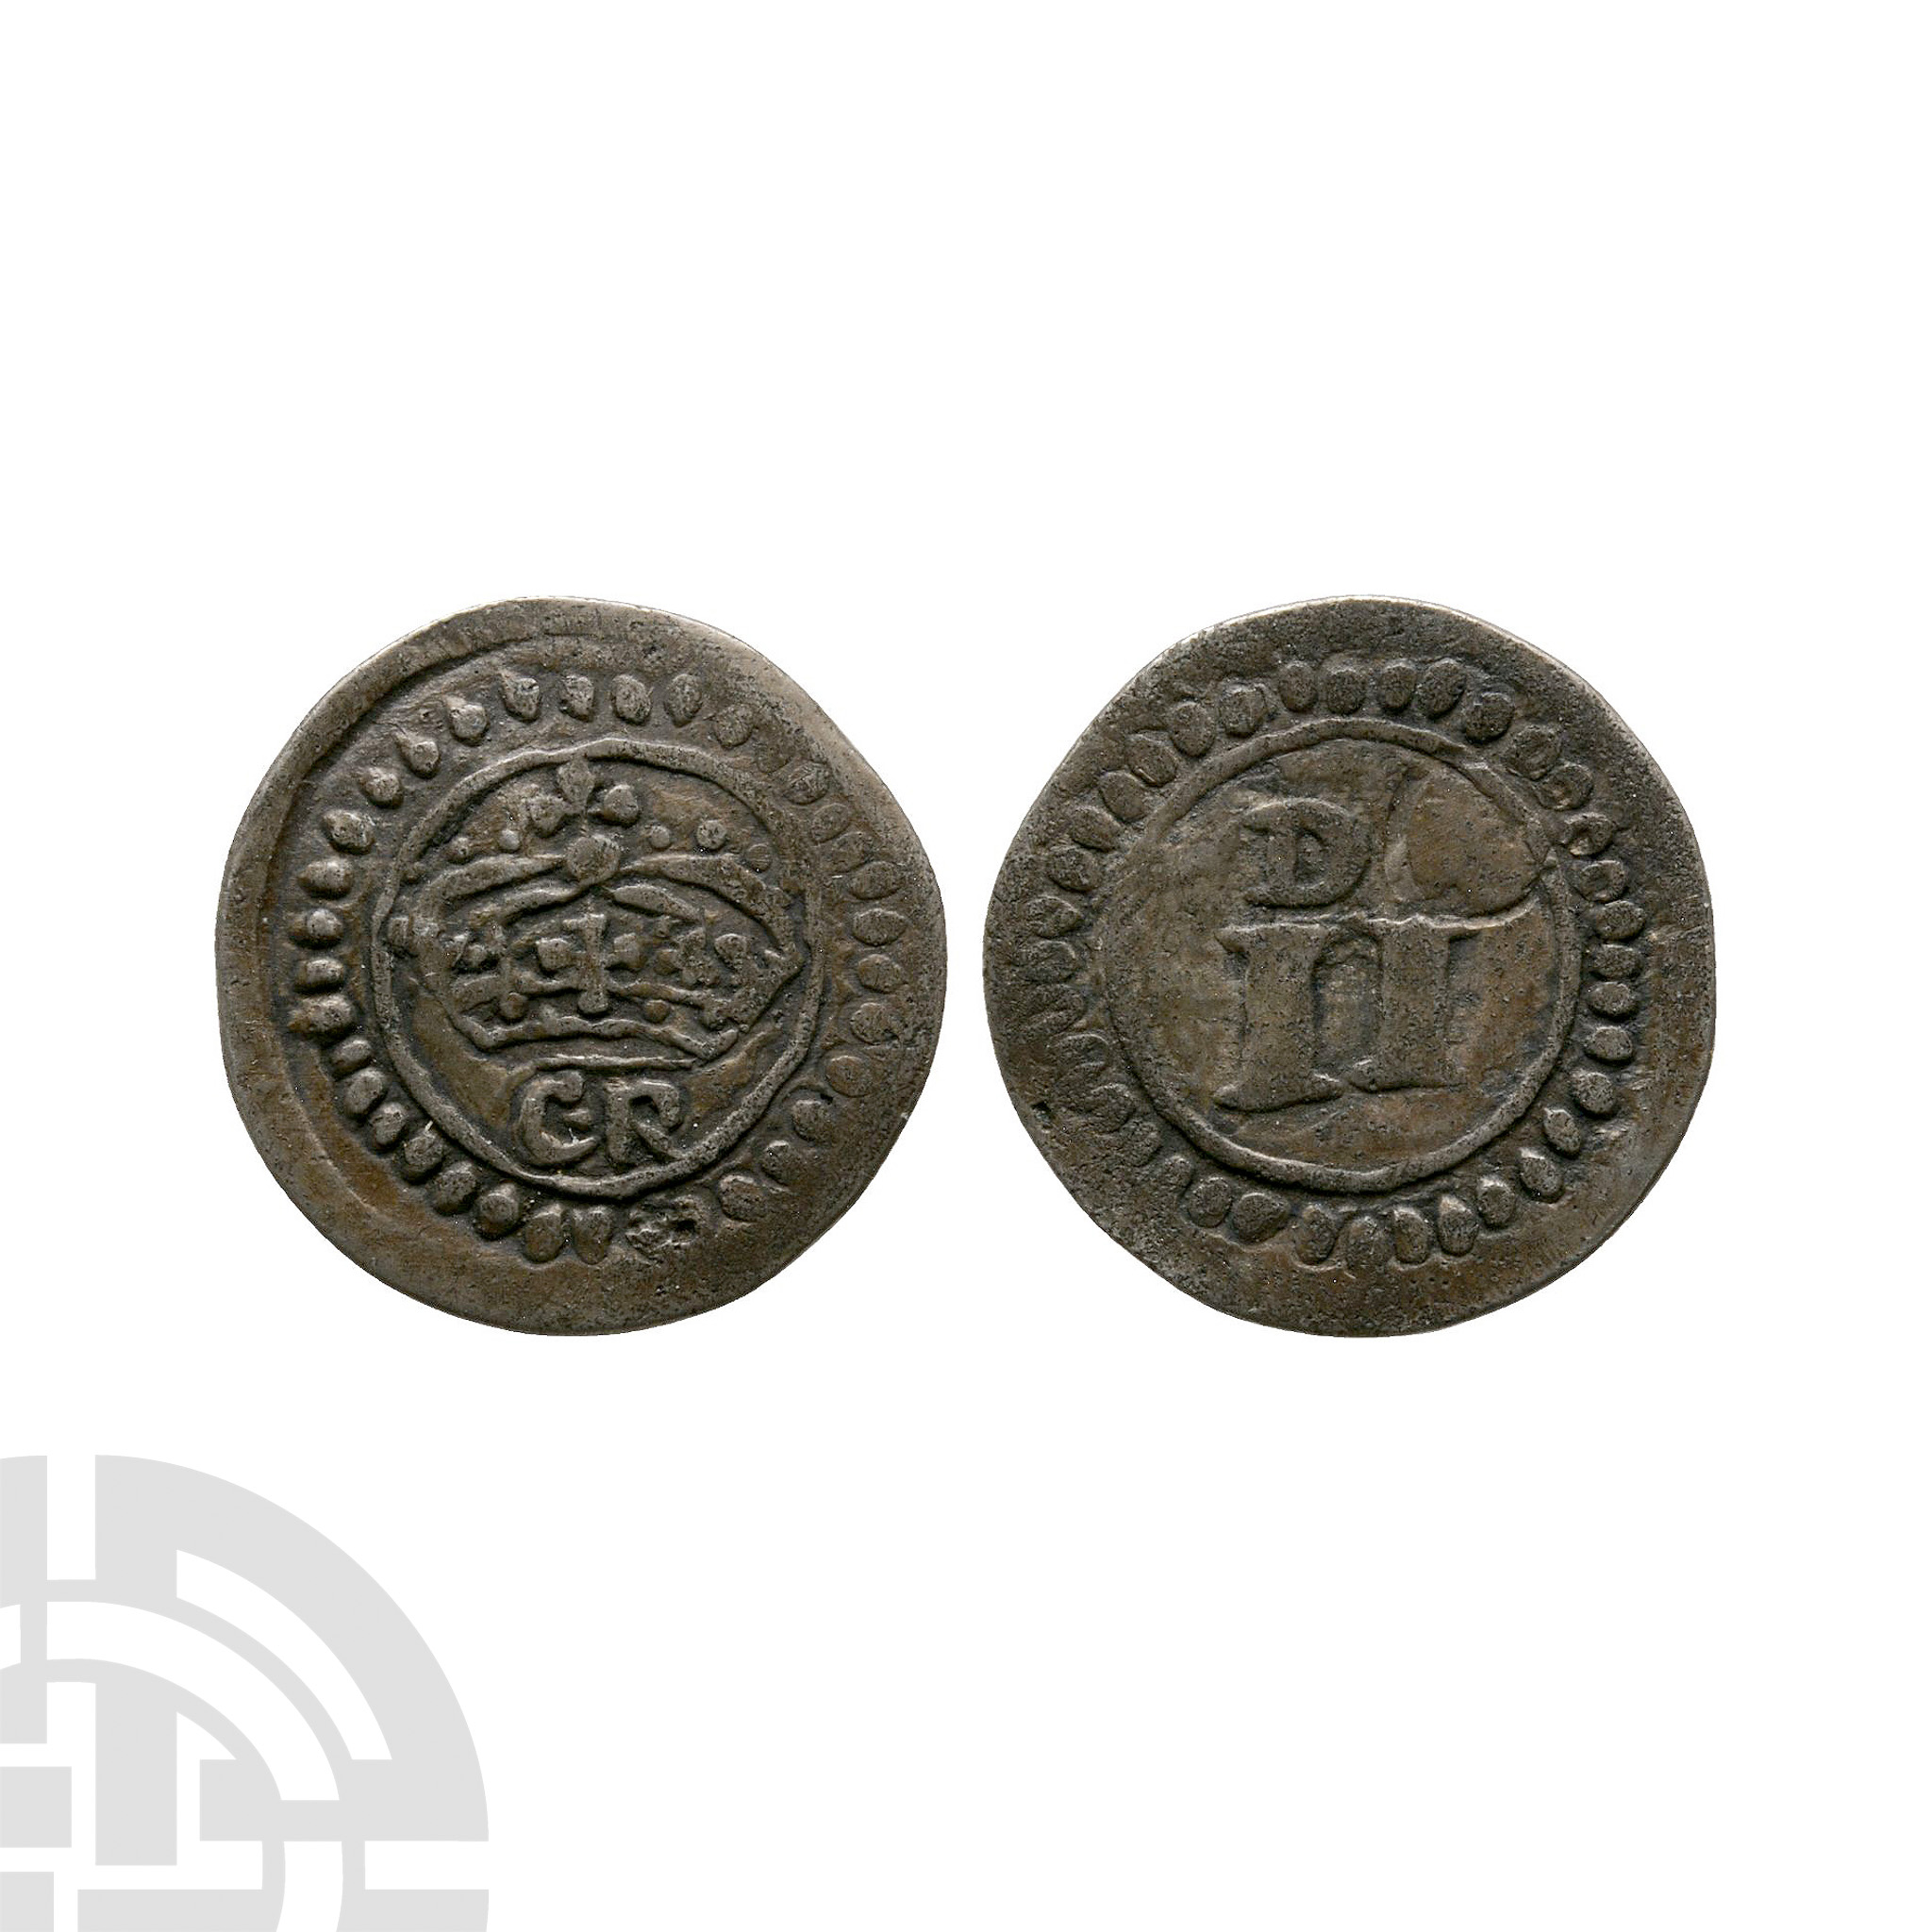 Irish Coins - Ireland - Contemporary Forgery - AR Ormonde Besieged Twopence